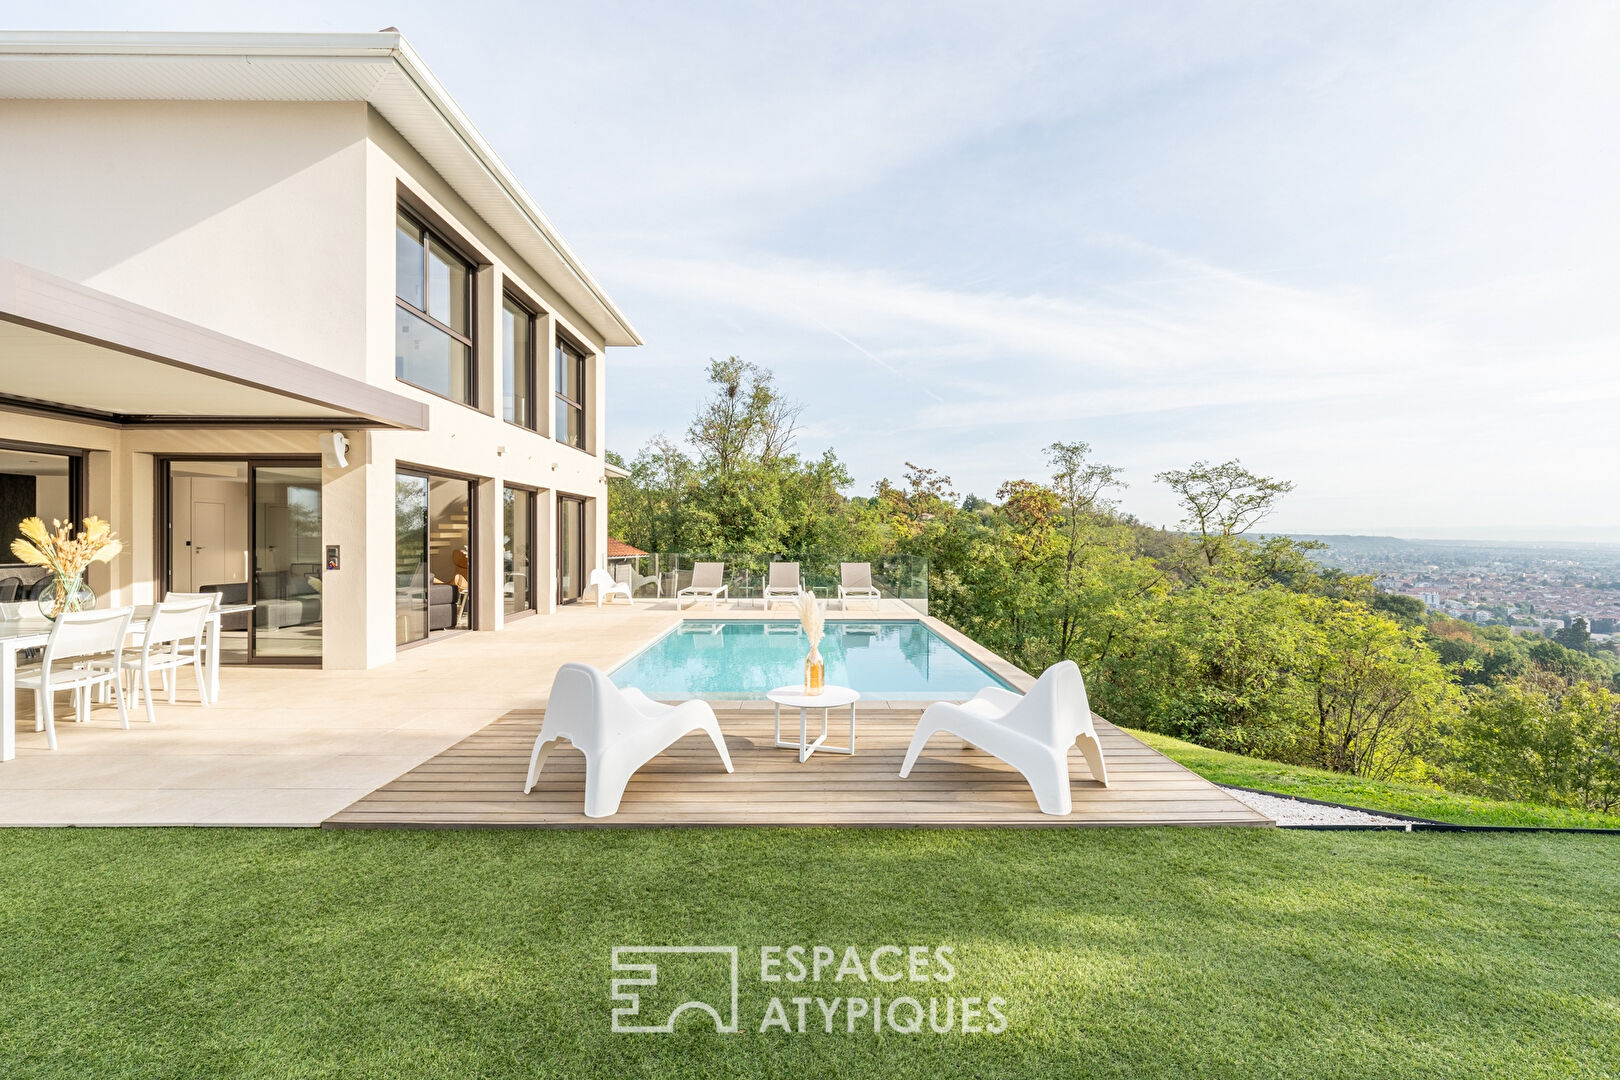 Contemporary villa with a contemplative view